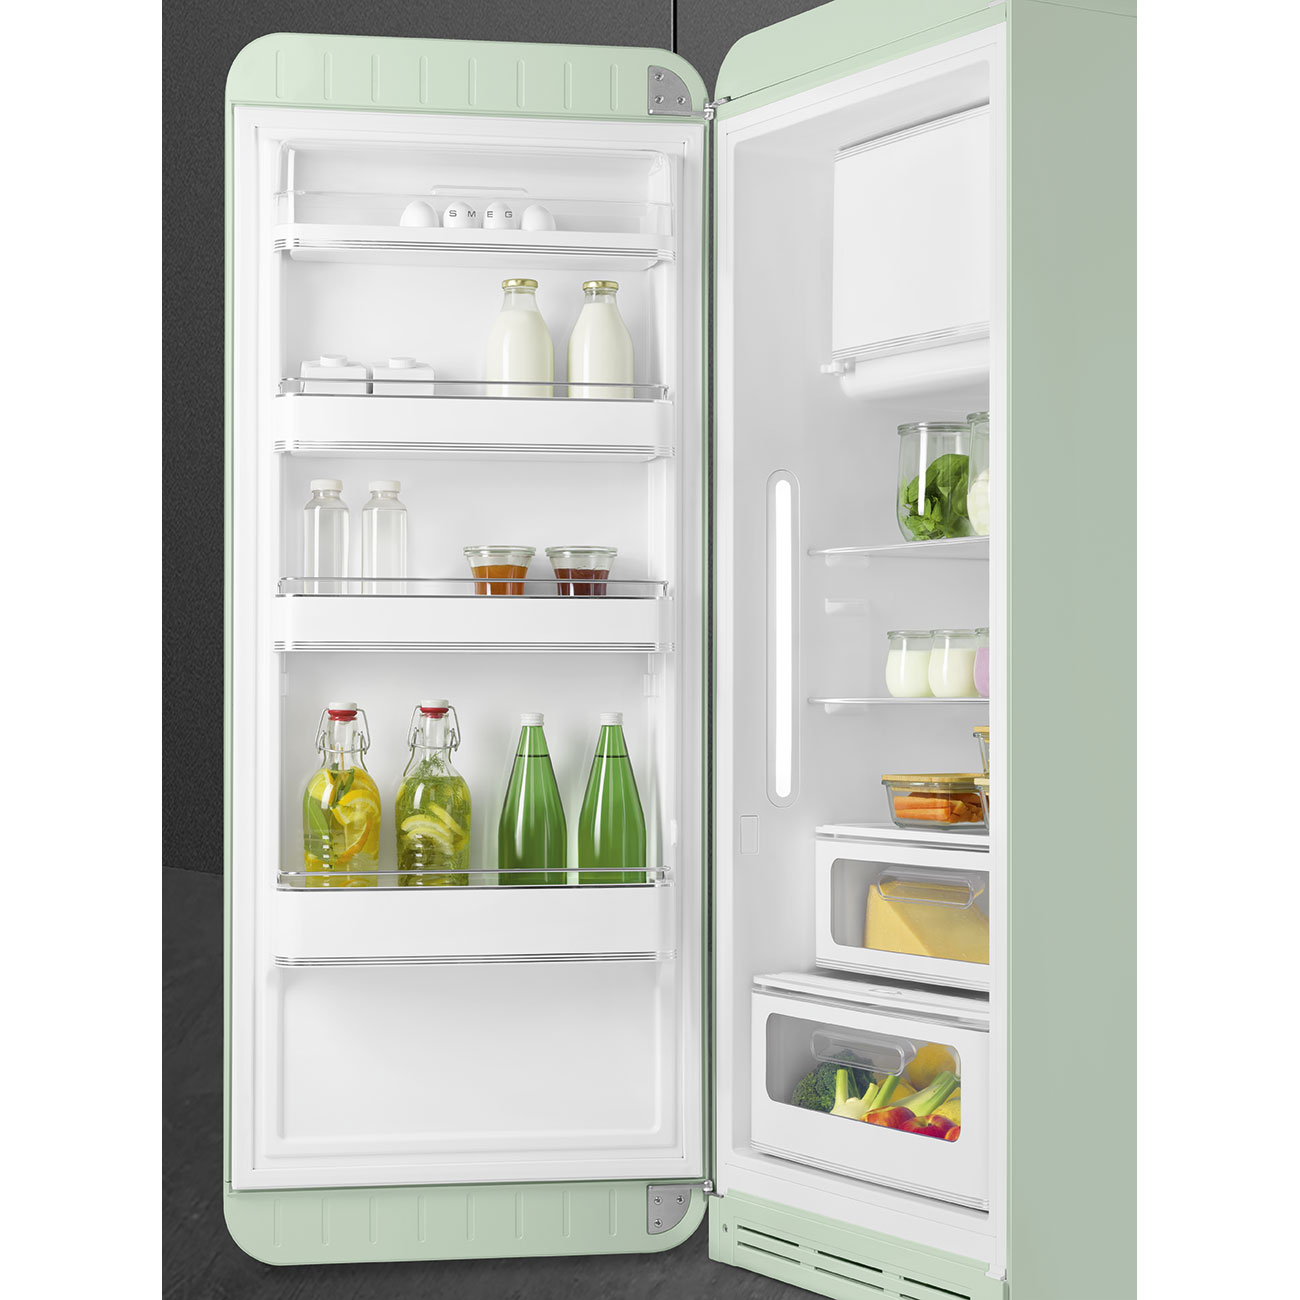 Pastel green refrigerator - Smeg_9